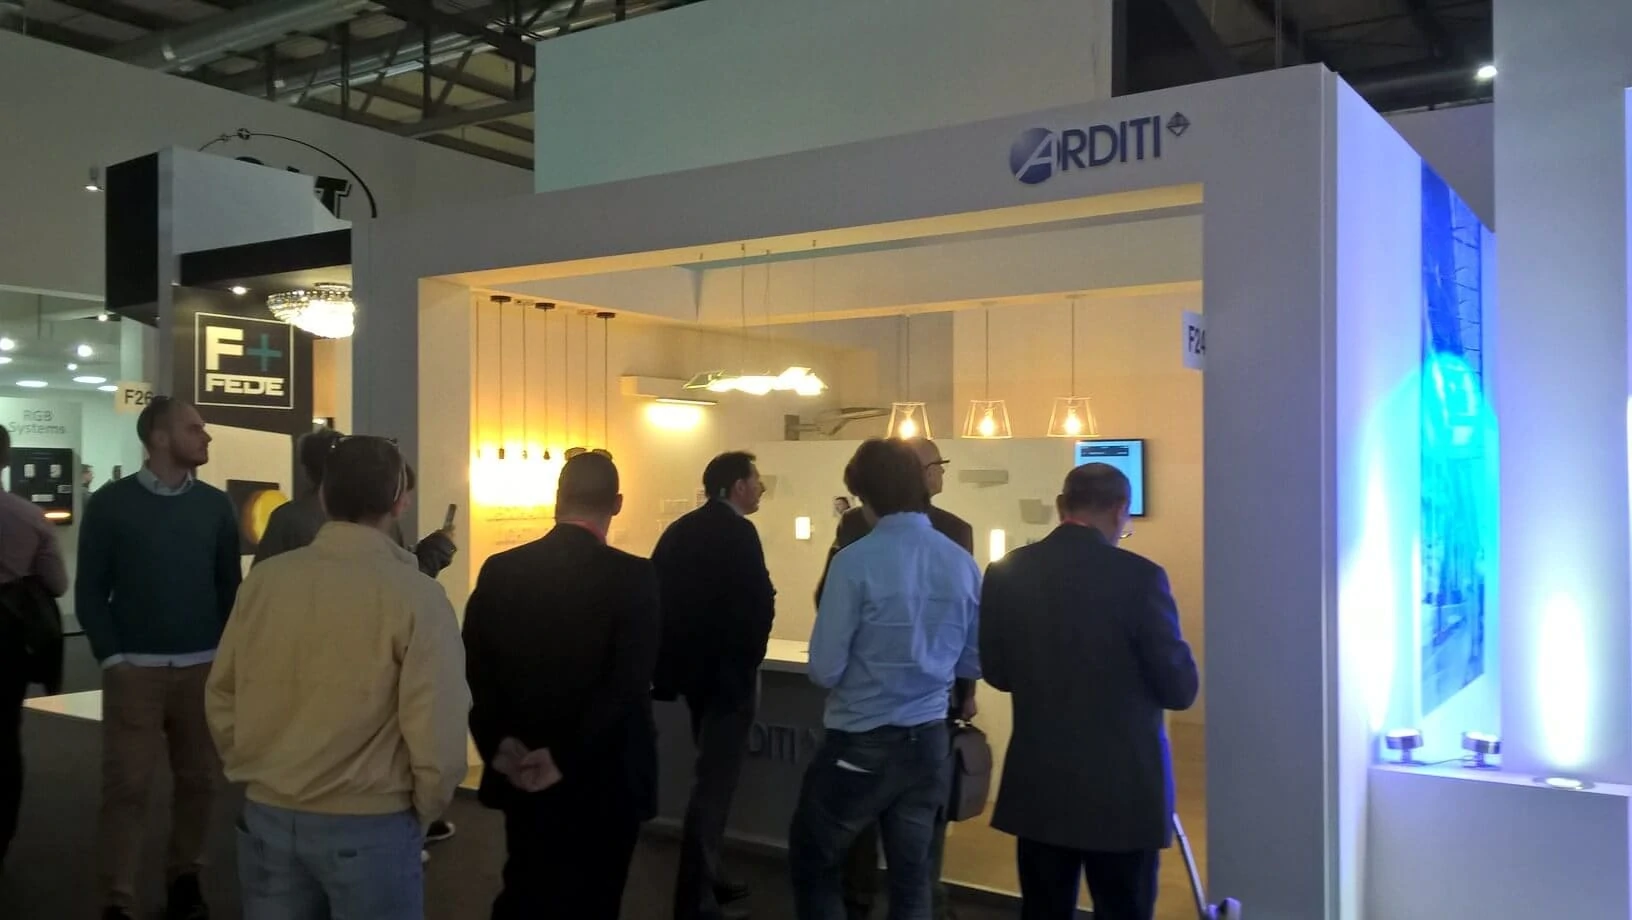 Arditi spa showed Lumiblade OLED panels at Euroluce